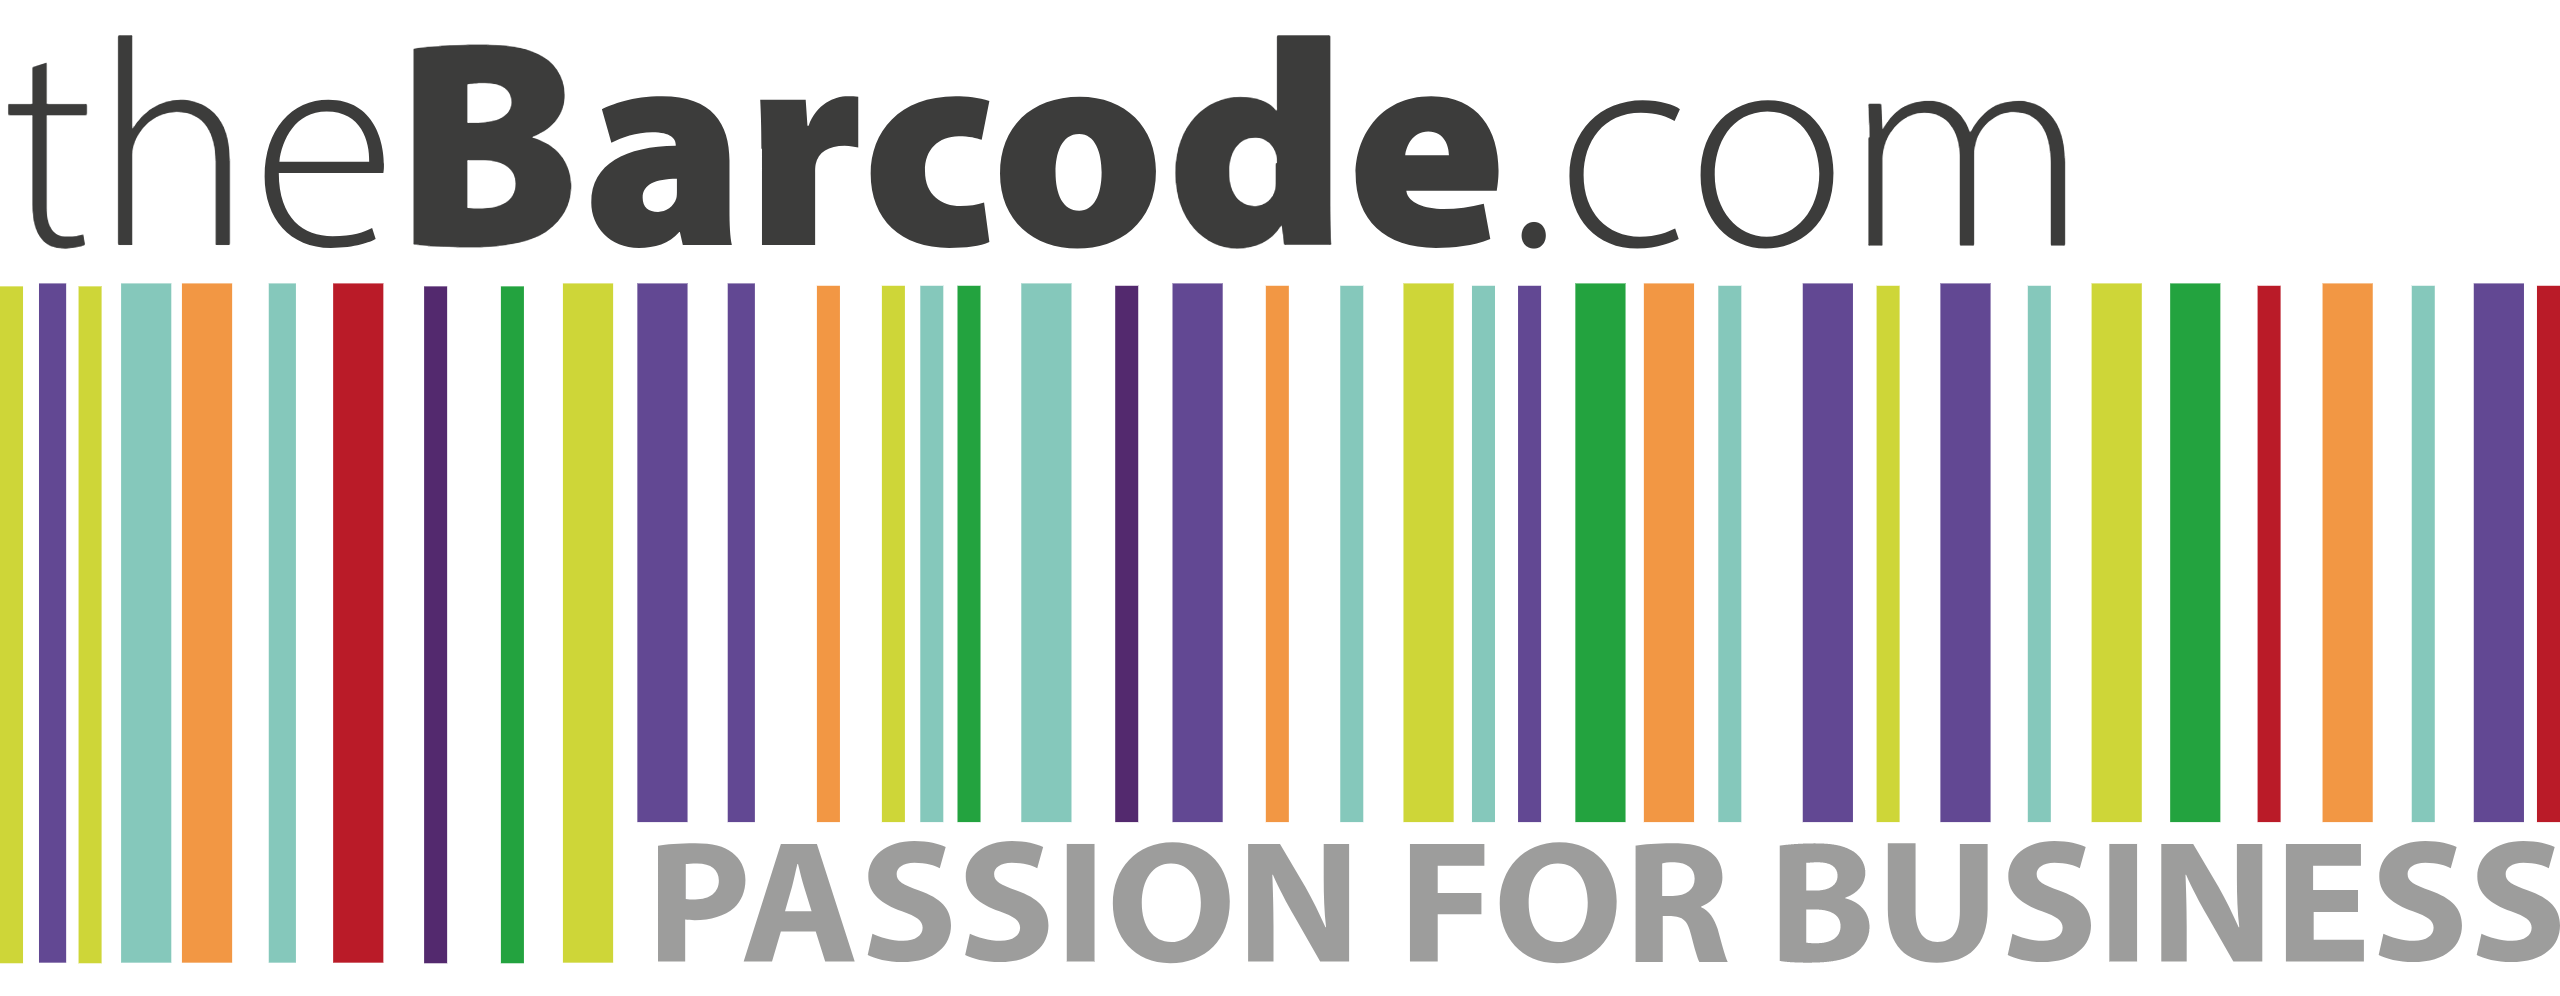 The Barcode Website Logo